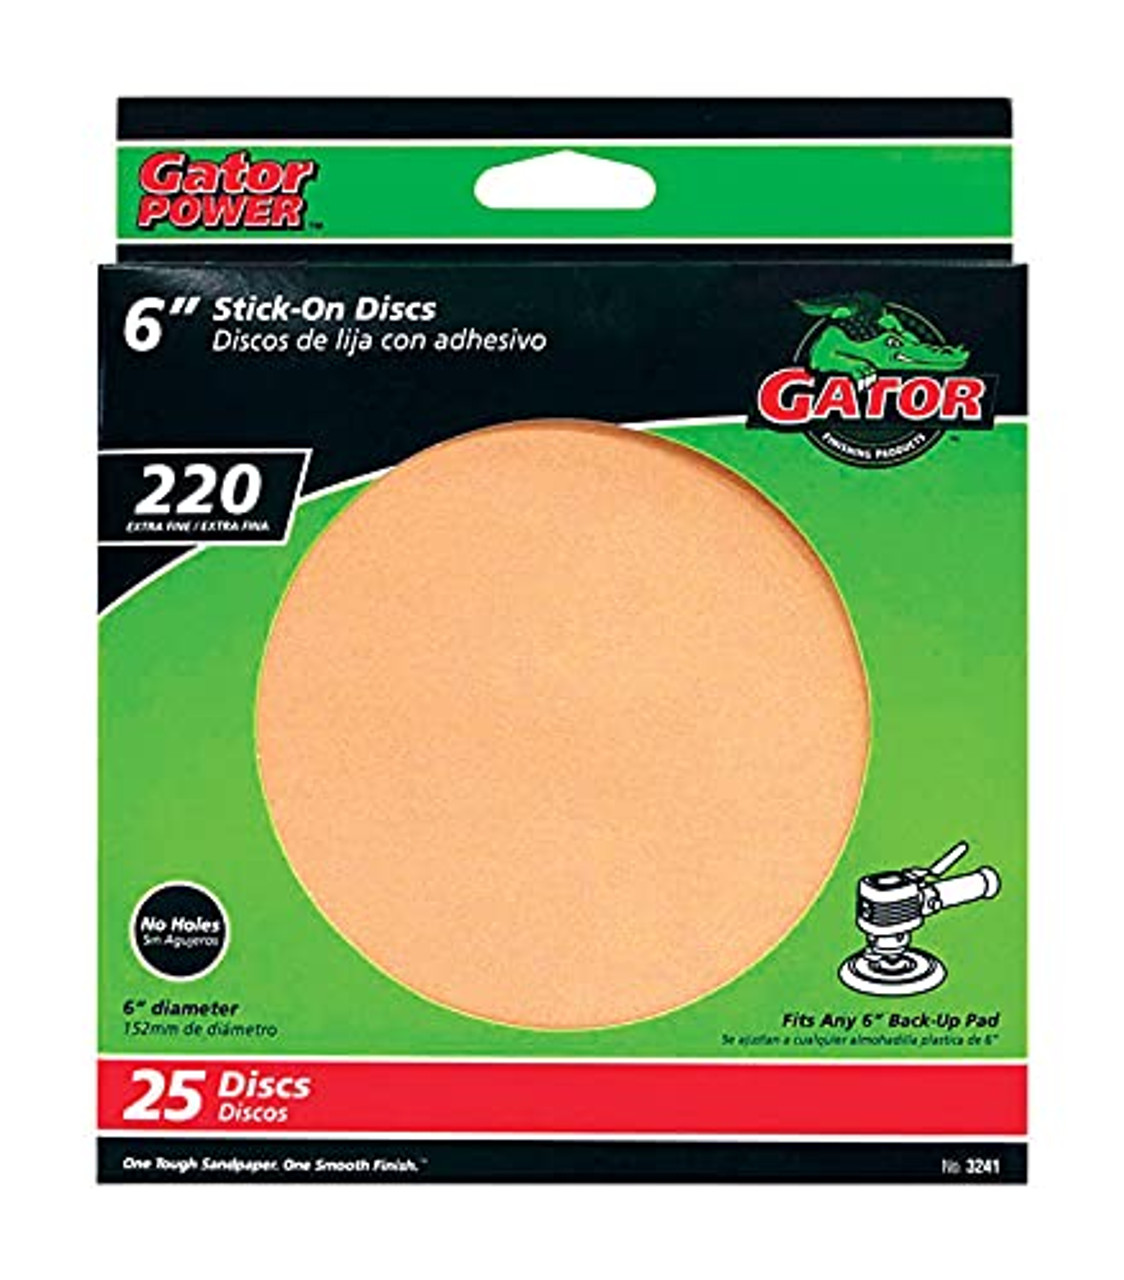 Gator Sand Disc 6" 220 grit 25pk (3241)